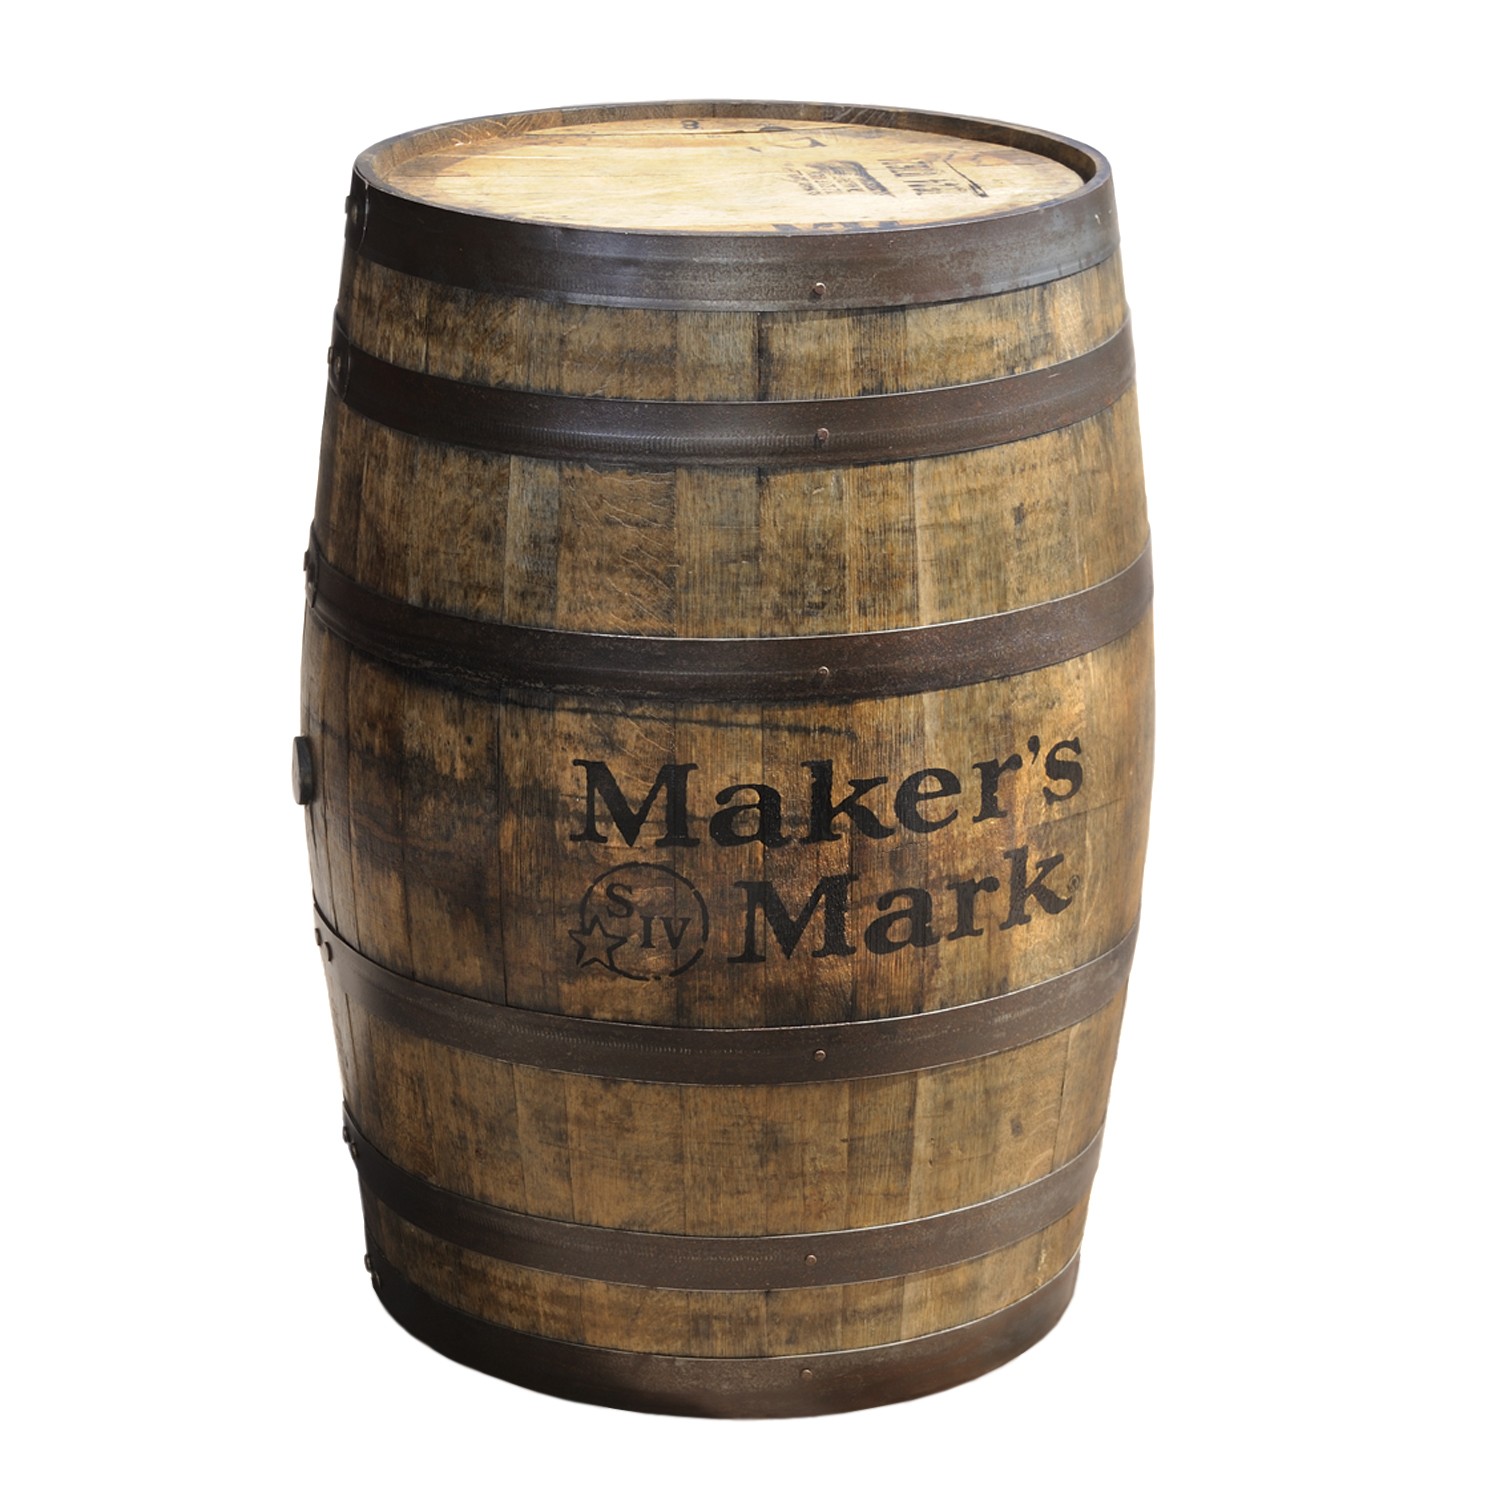 Authentic Maker's Mark Barrel | Maker's Mark Gift Shop